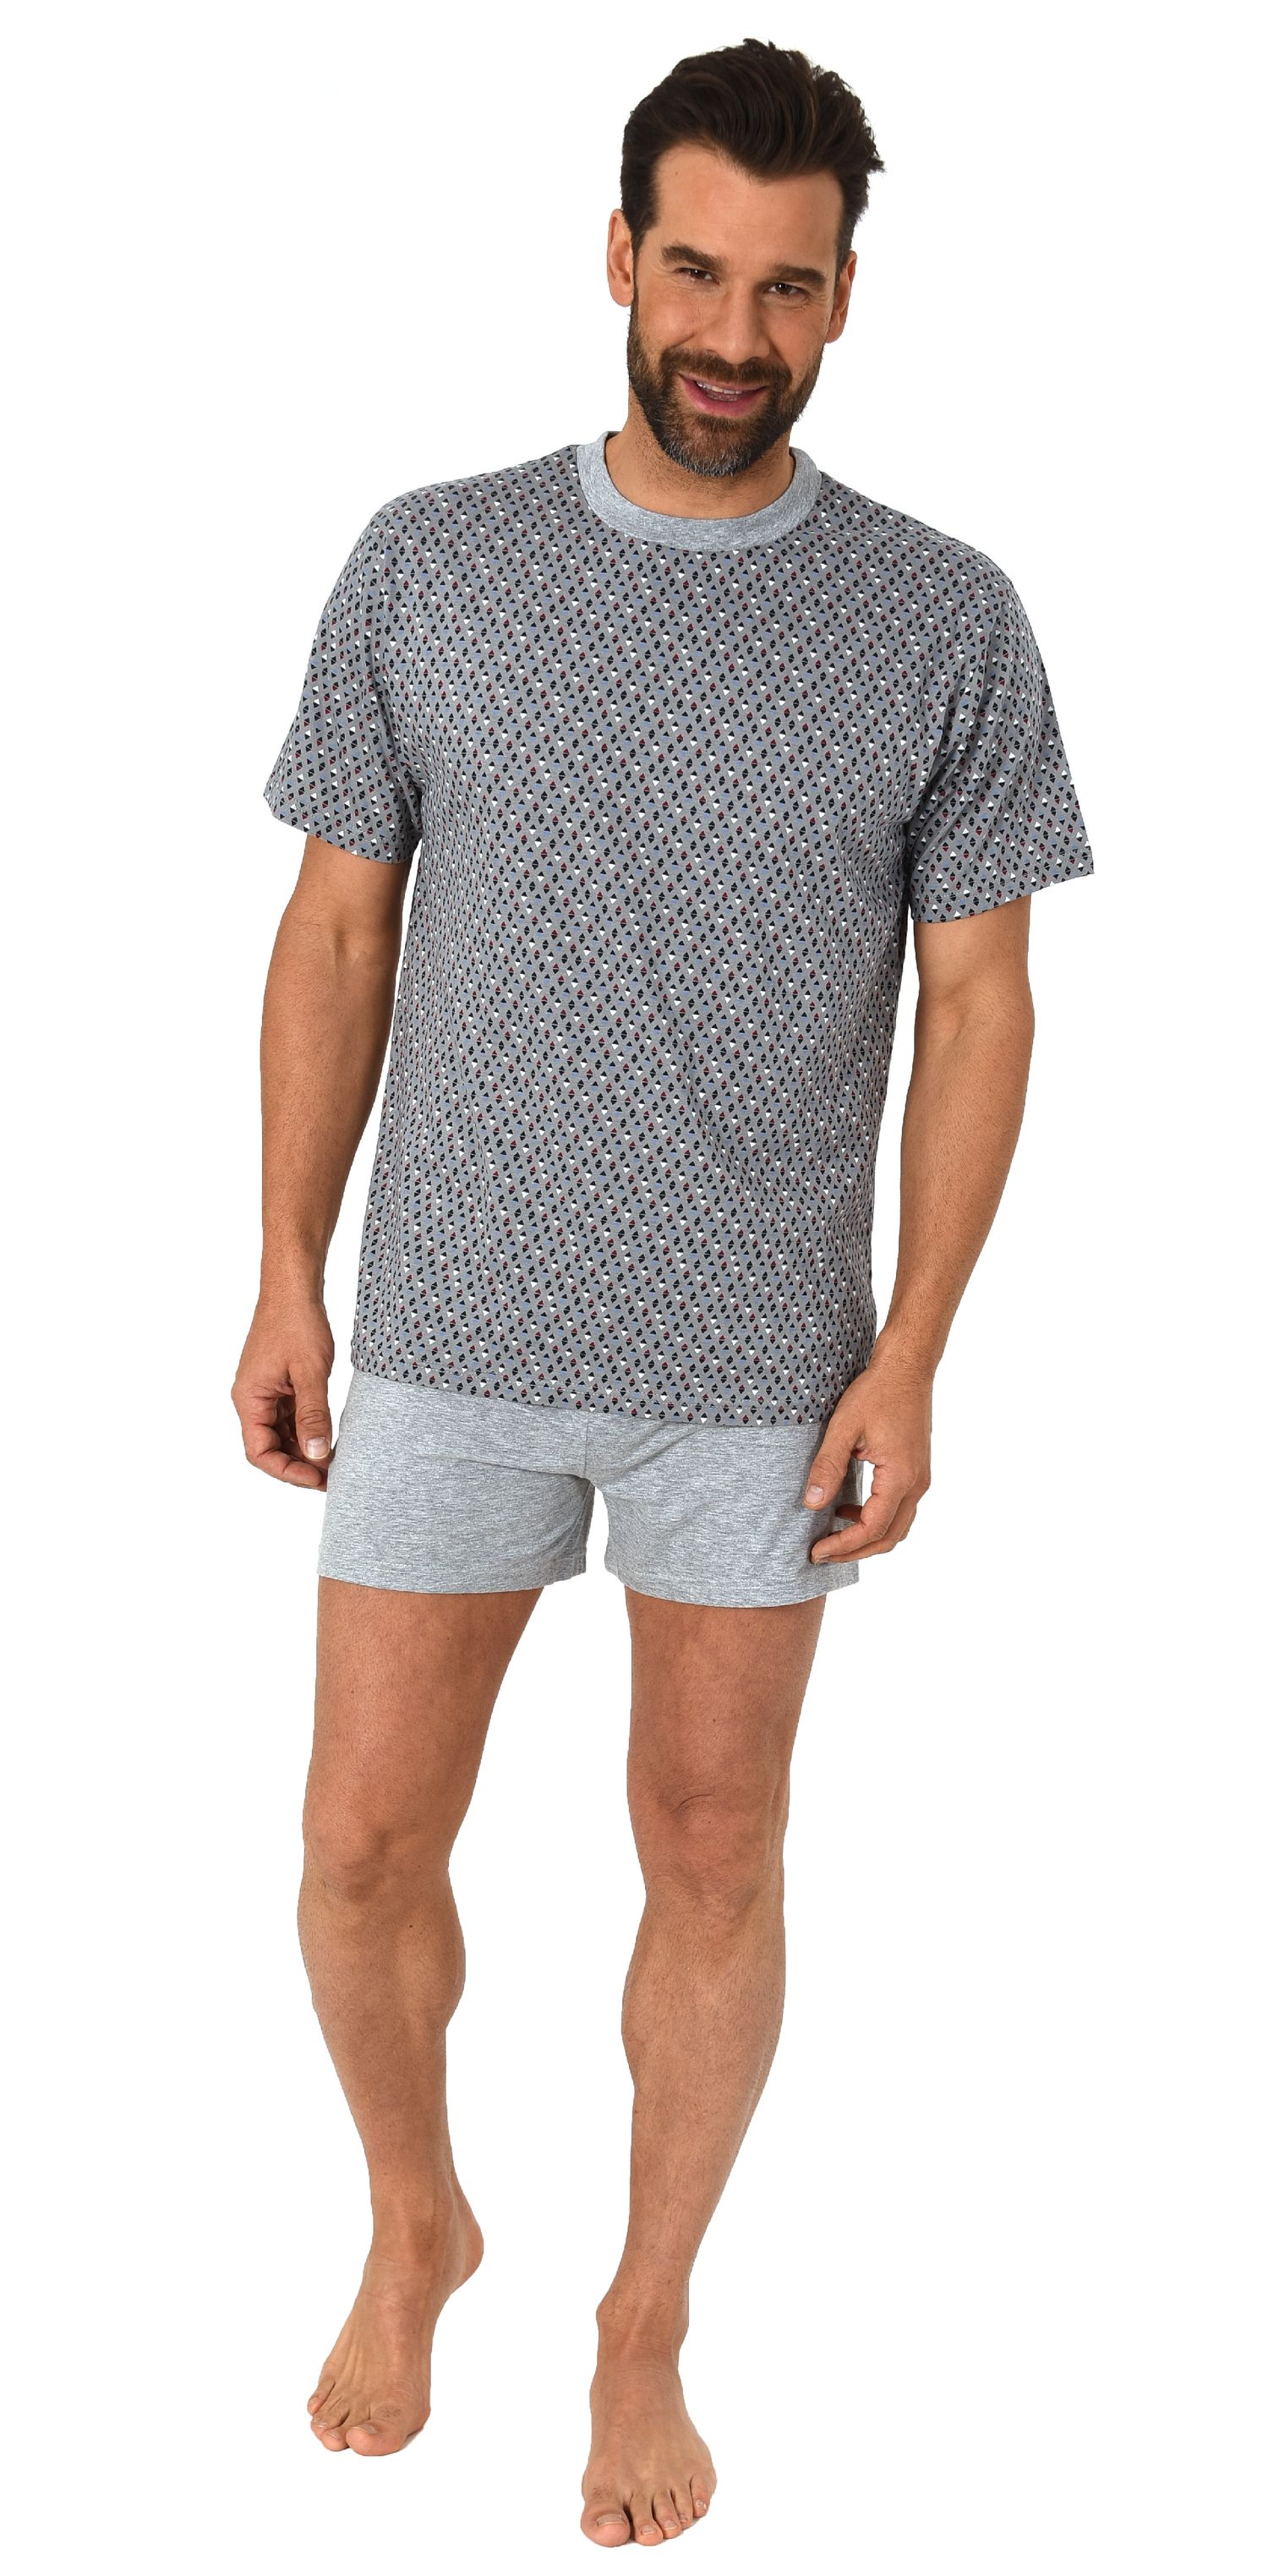 Eleganter Herren Pyjama Shorty Schlafanzug kurzarm mit edlen minimal Print  64216